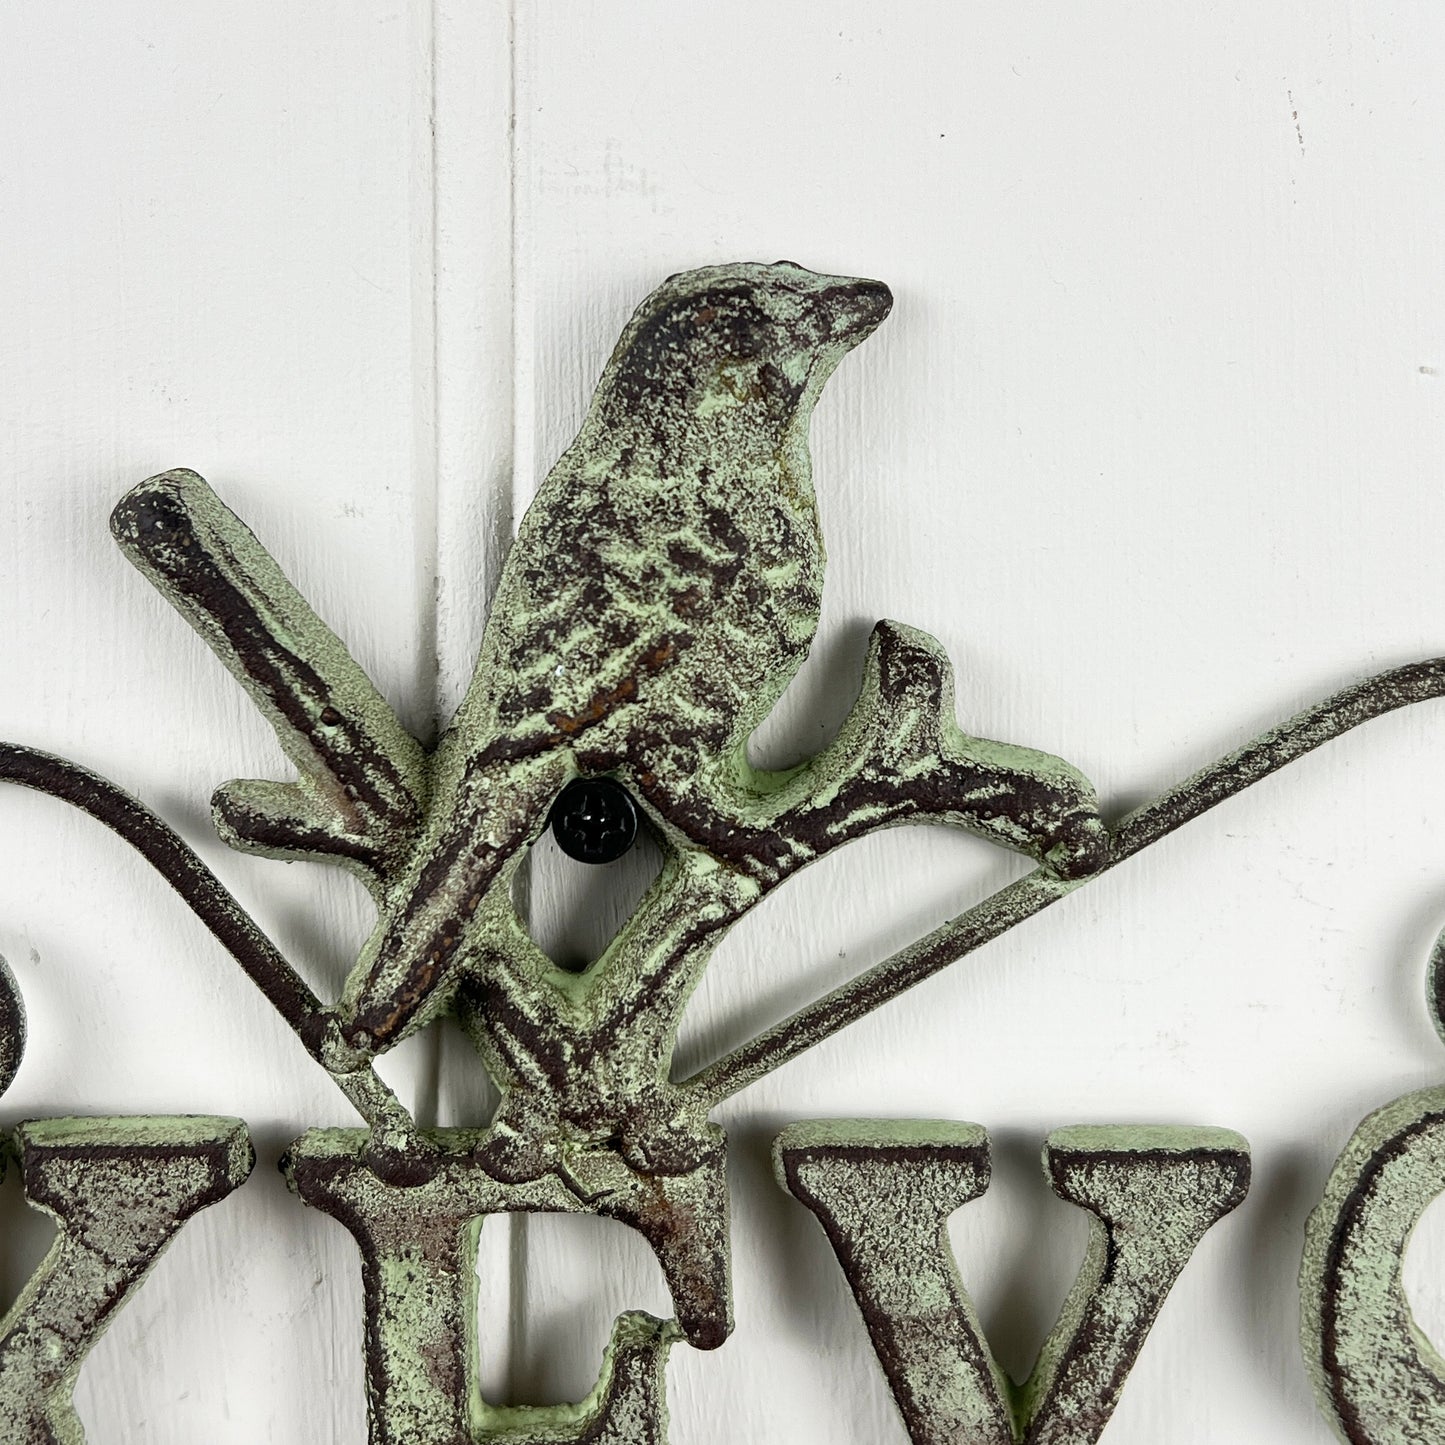 Vintage Style Key Rack with Bird